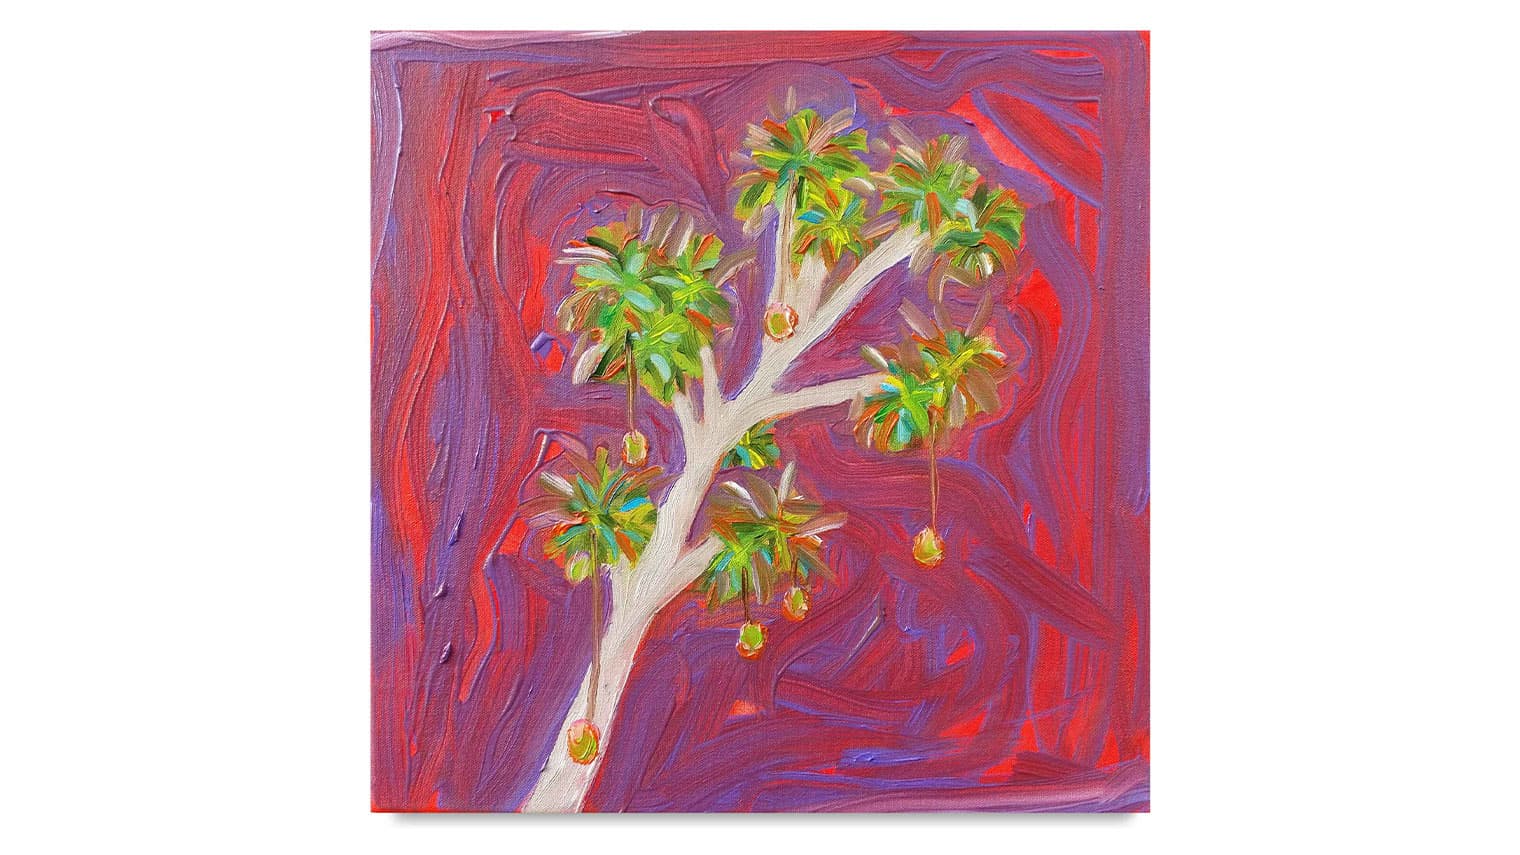 Painting titled 'Mango Tree' by artist Aiste Jakonyte